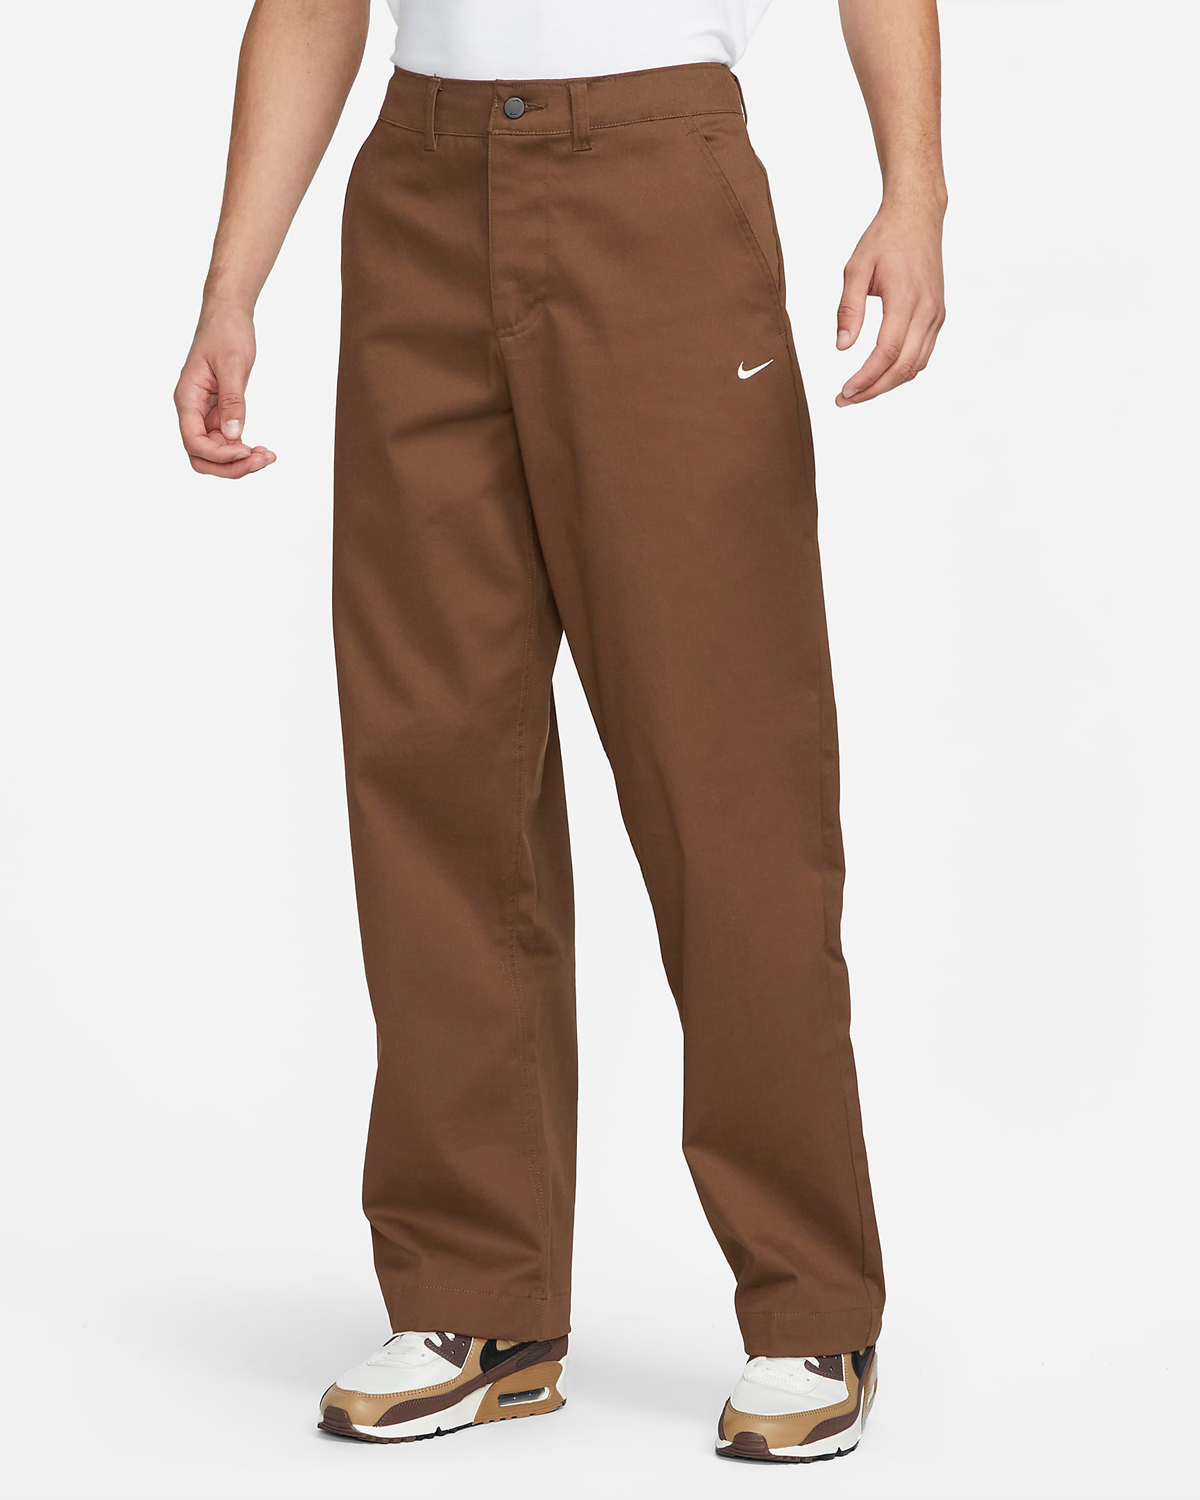 Nike-Cacao-Wow-Cotton-Chino-Pants